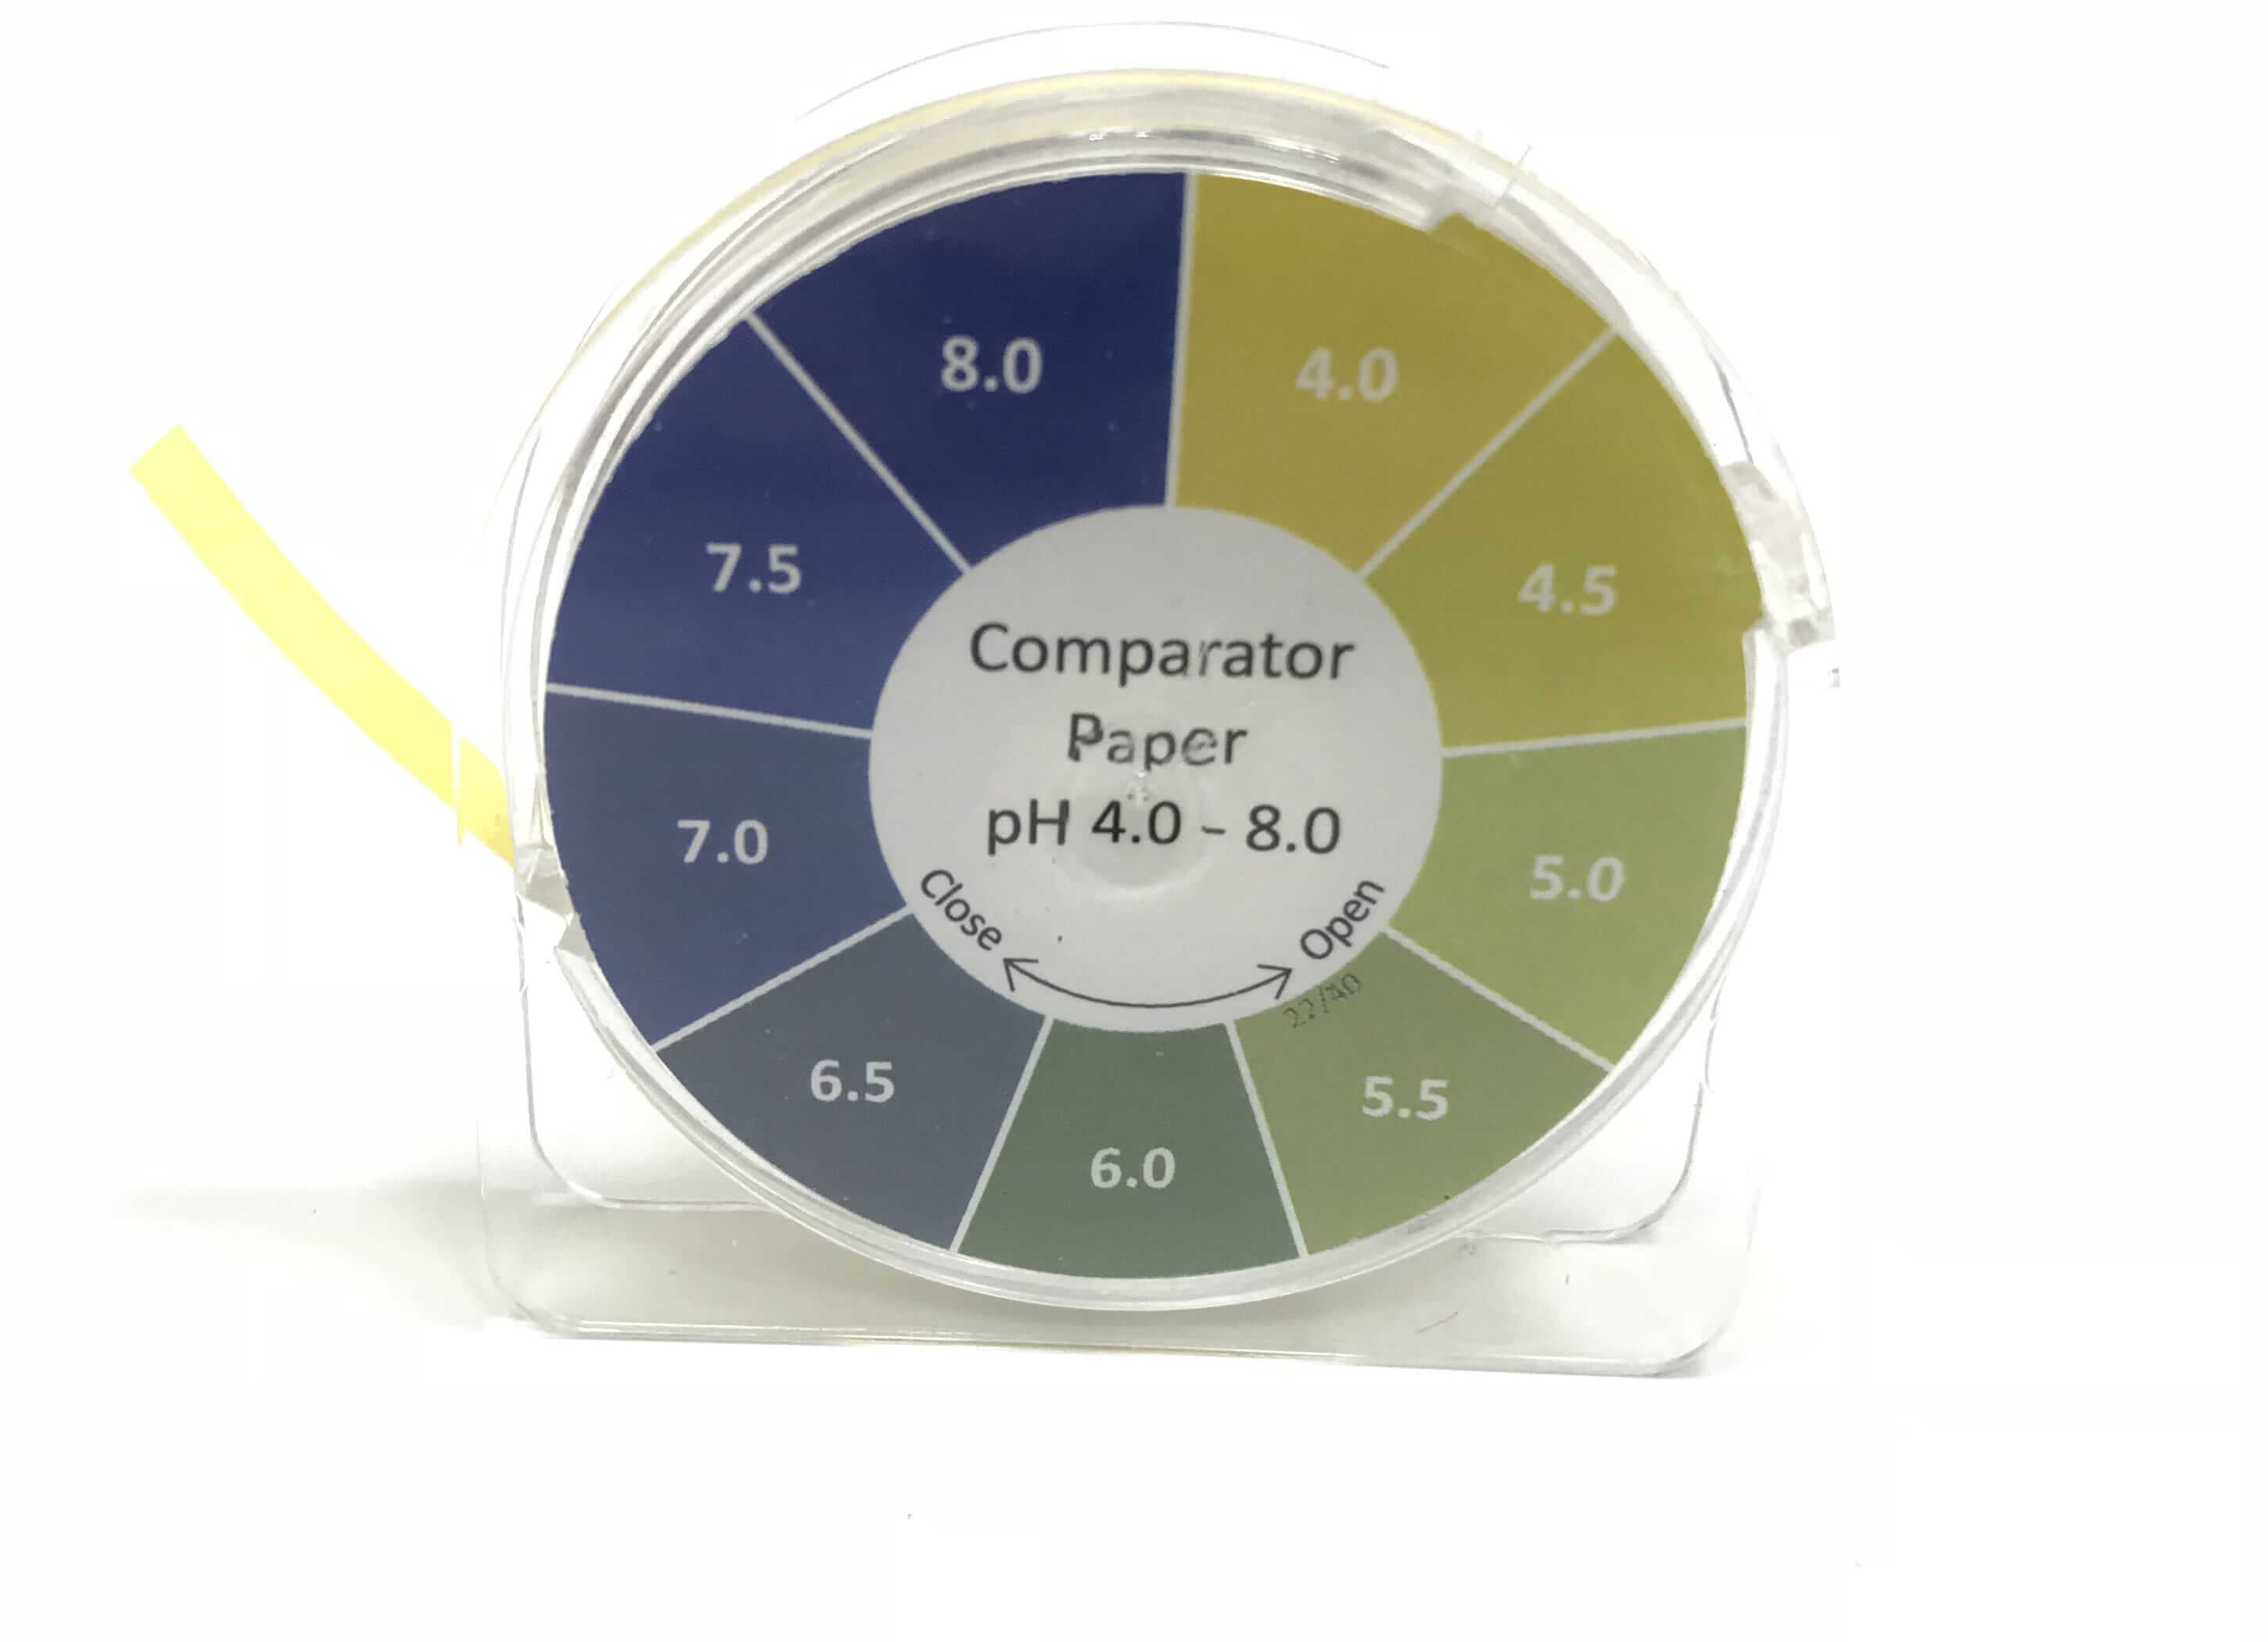 Comparator Paper pH 4.0 - 8.0